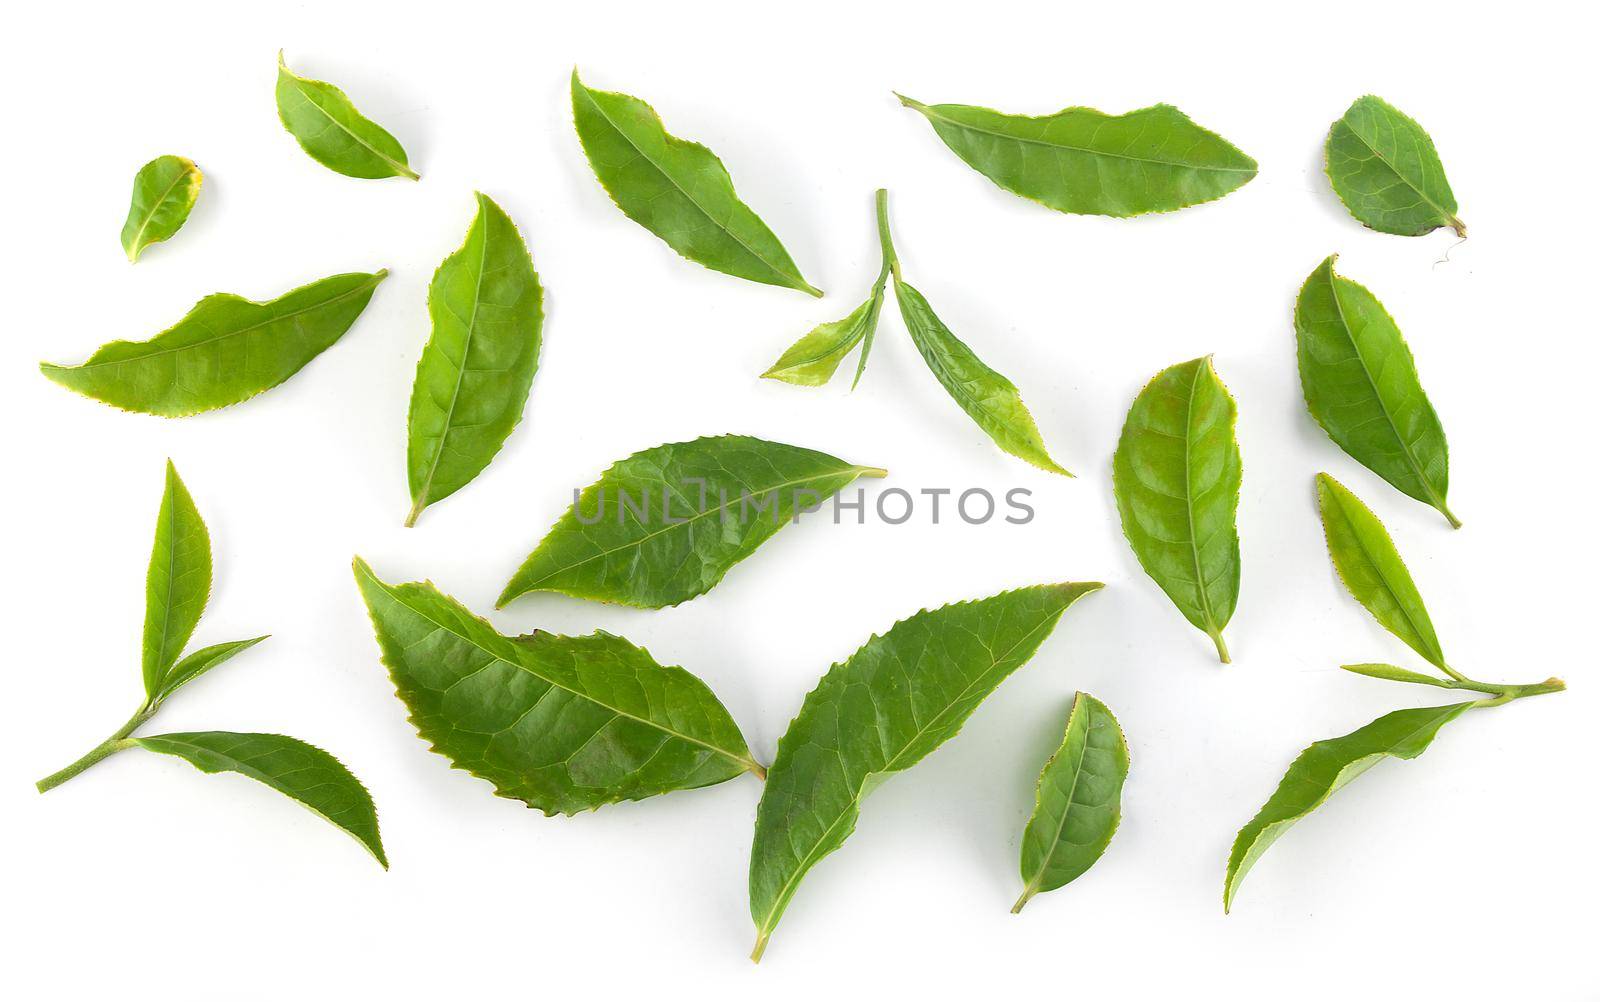 Green tea leaves by Angorius